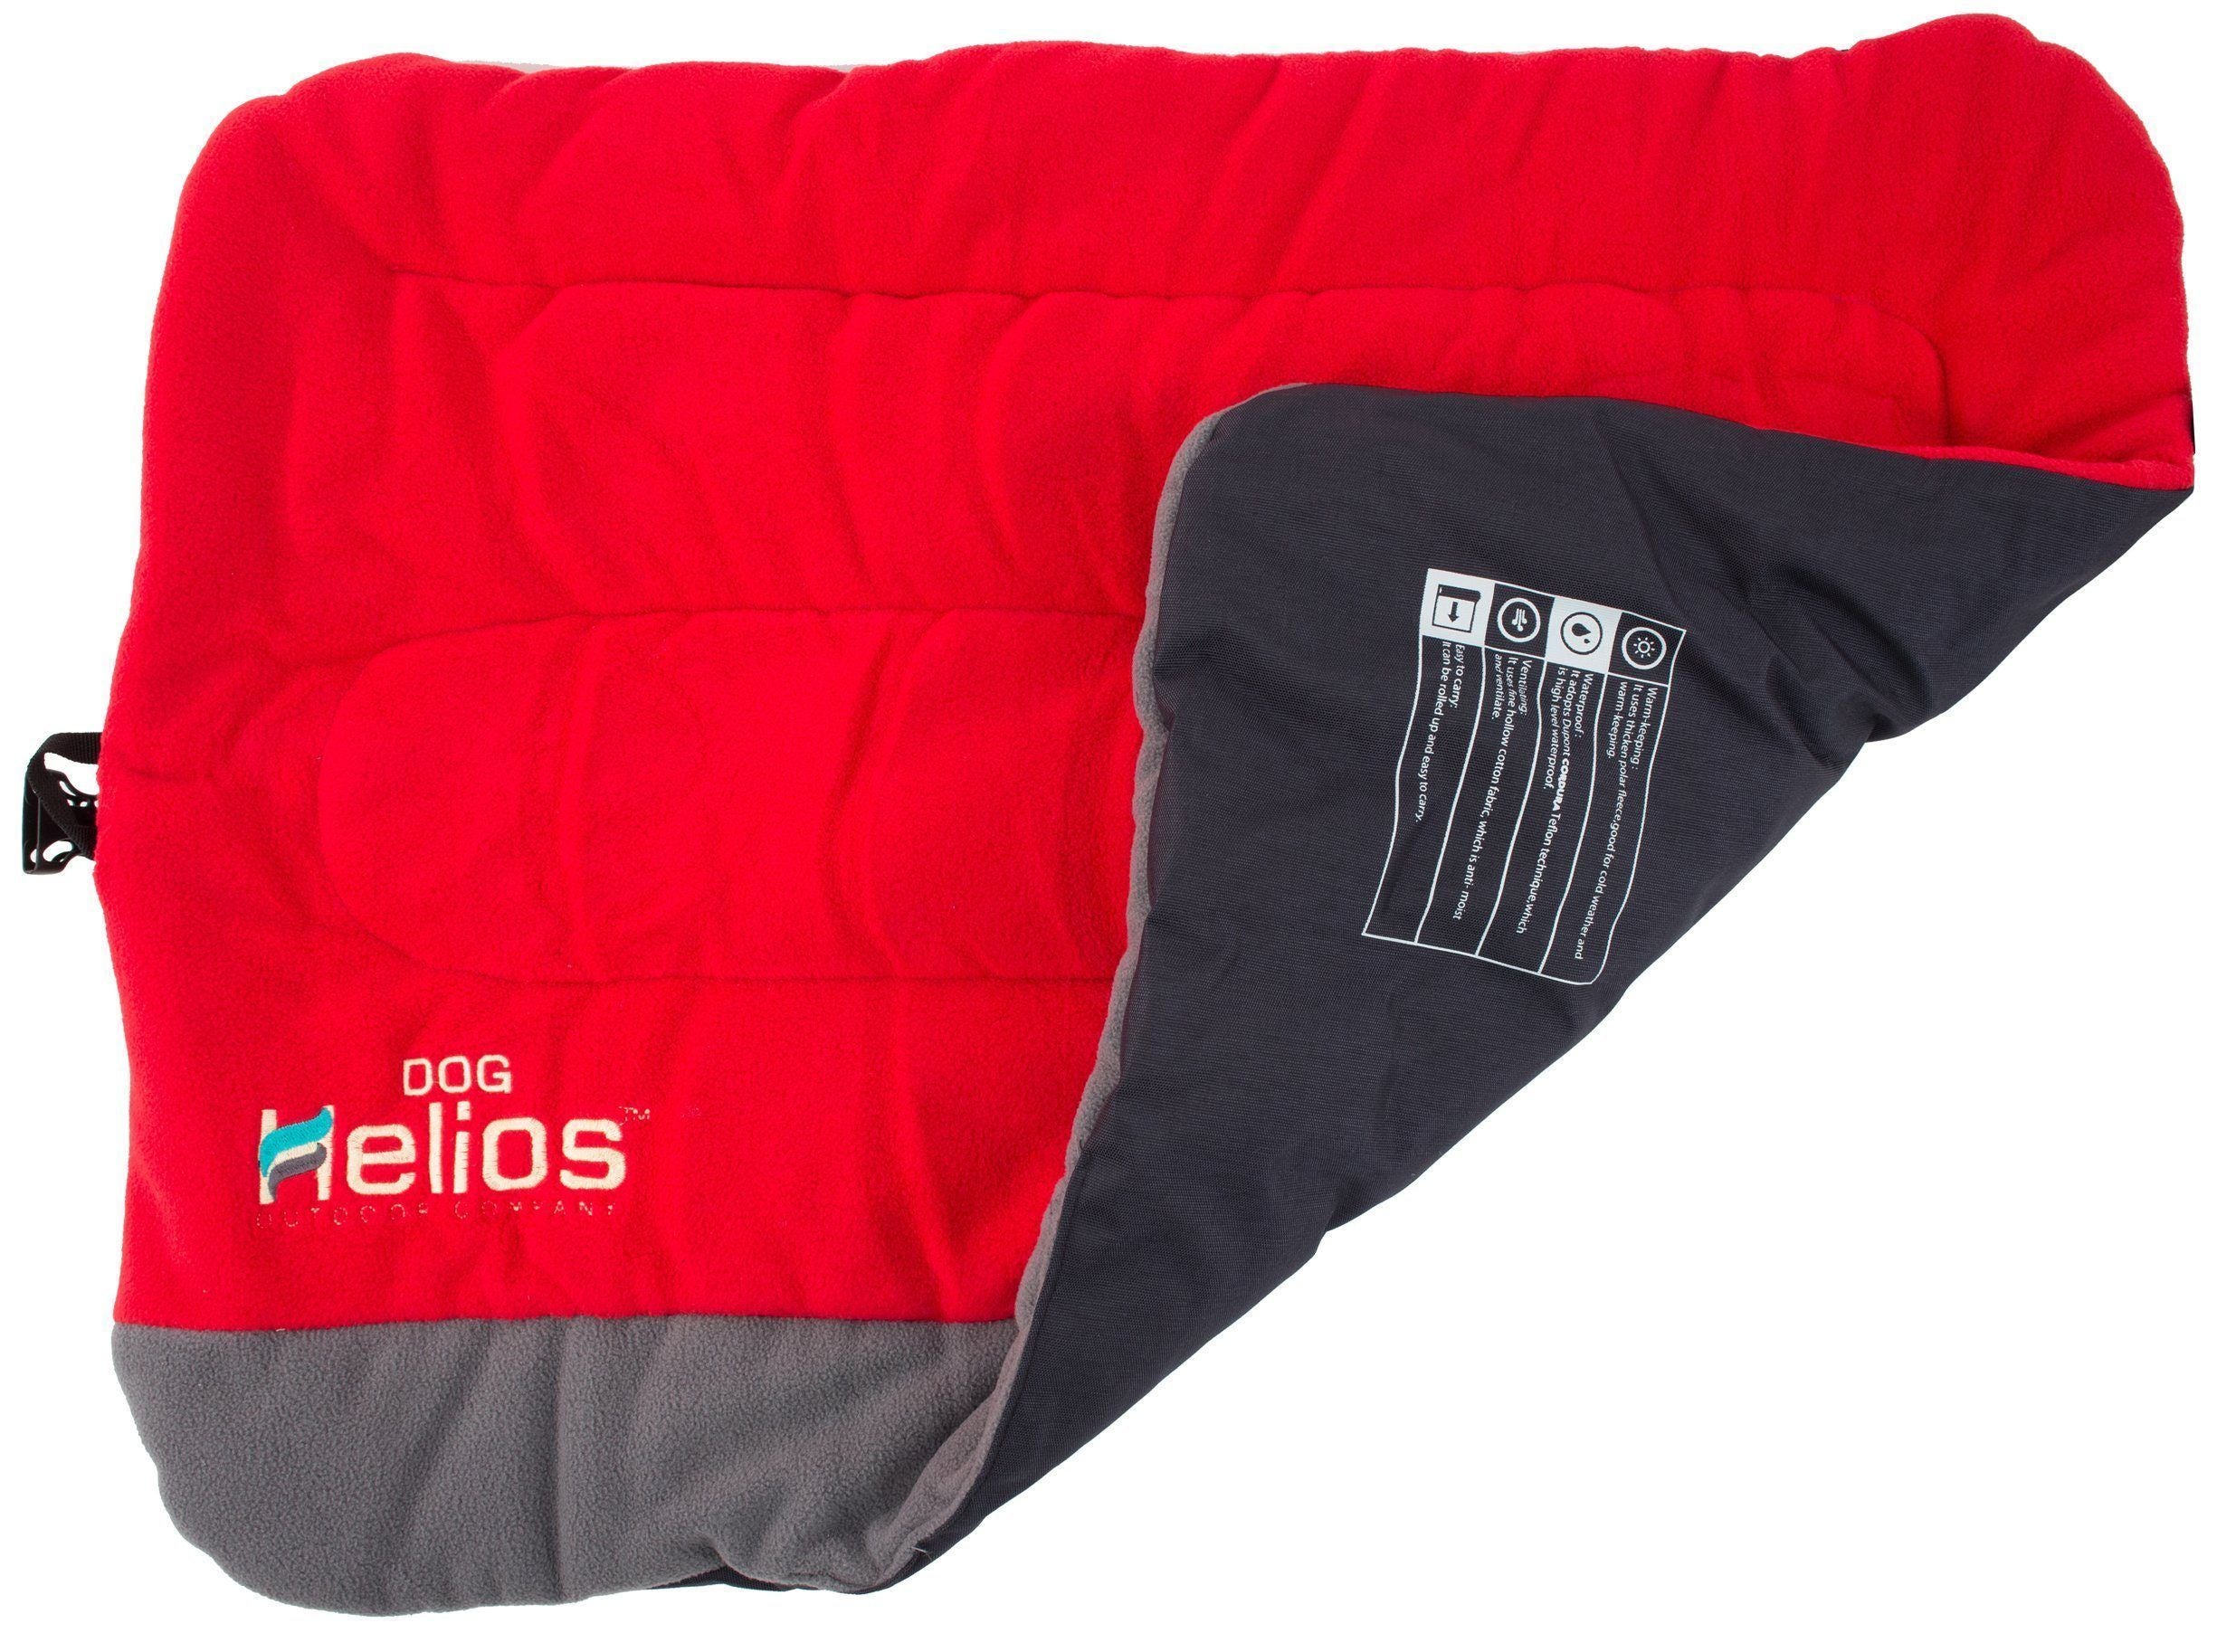 Dog Helios ® 'Combat-Terrain' Cordura-Nyco Reversible Nylon and Fleece Travel Camping Dog Bed Medium Red, Grey